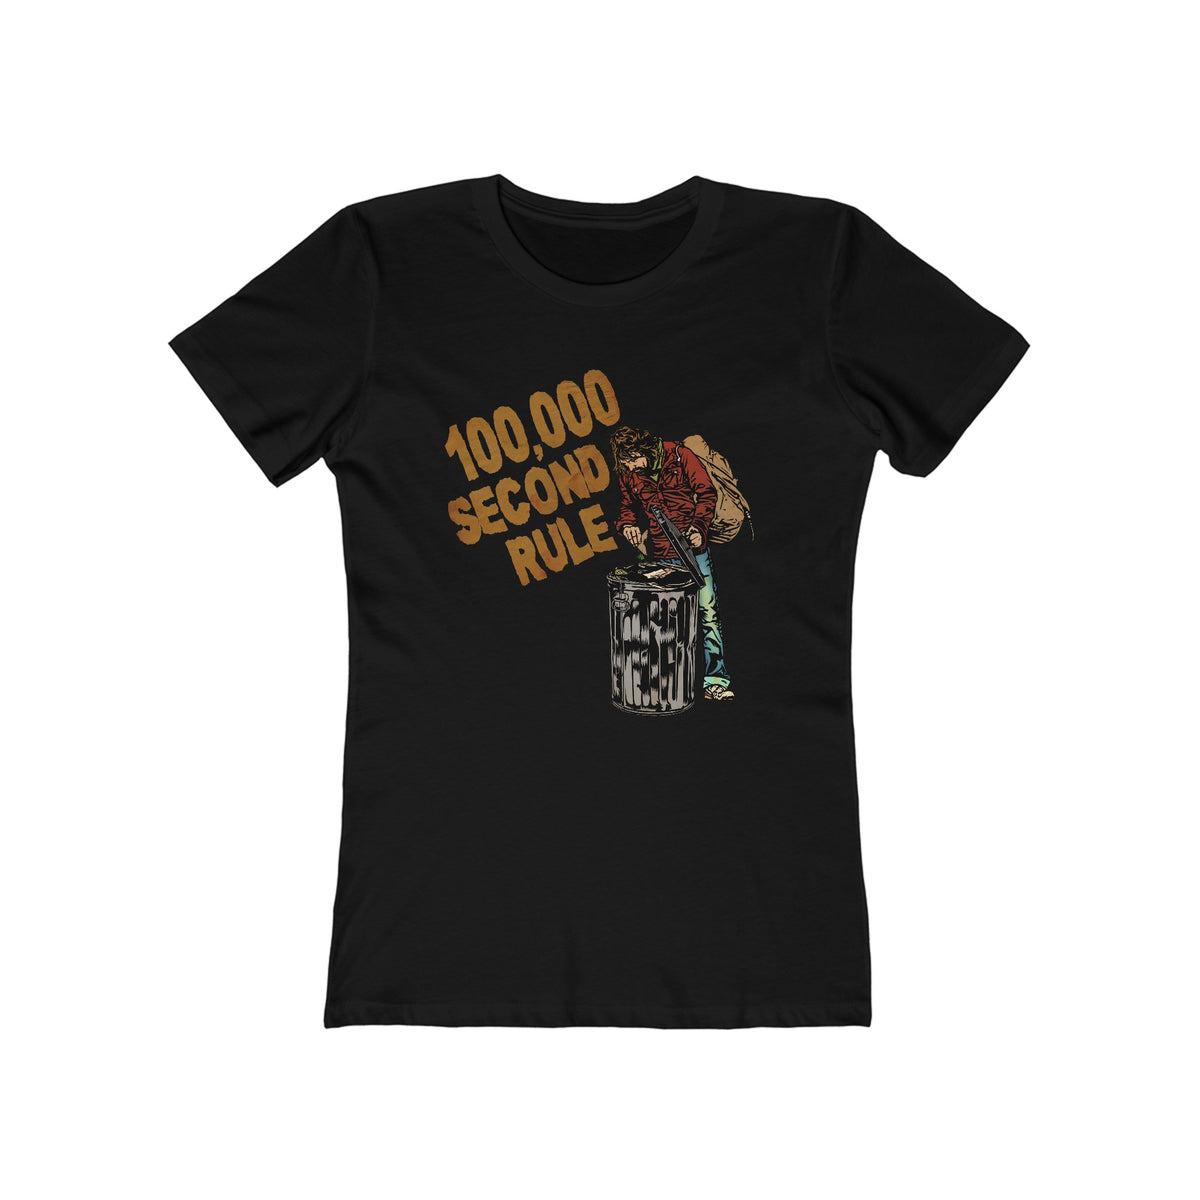 100000 Second Rule  - Women’s T-Shirt